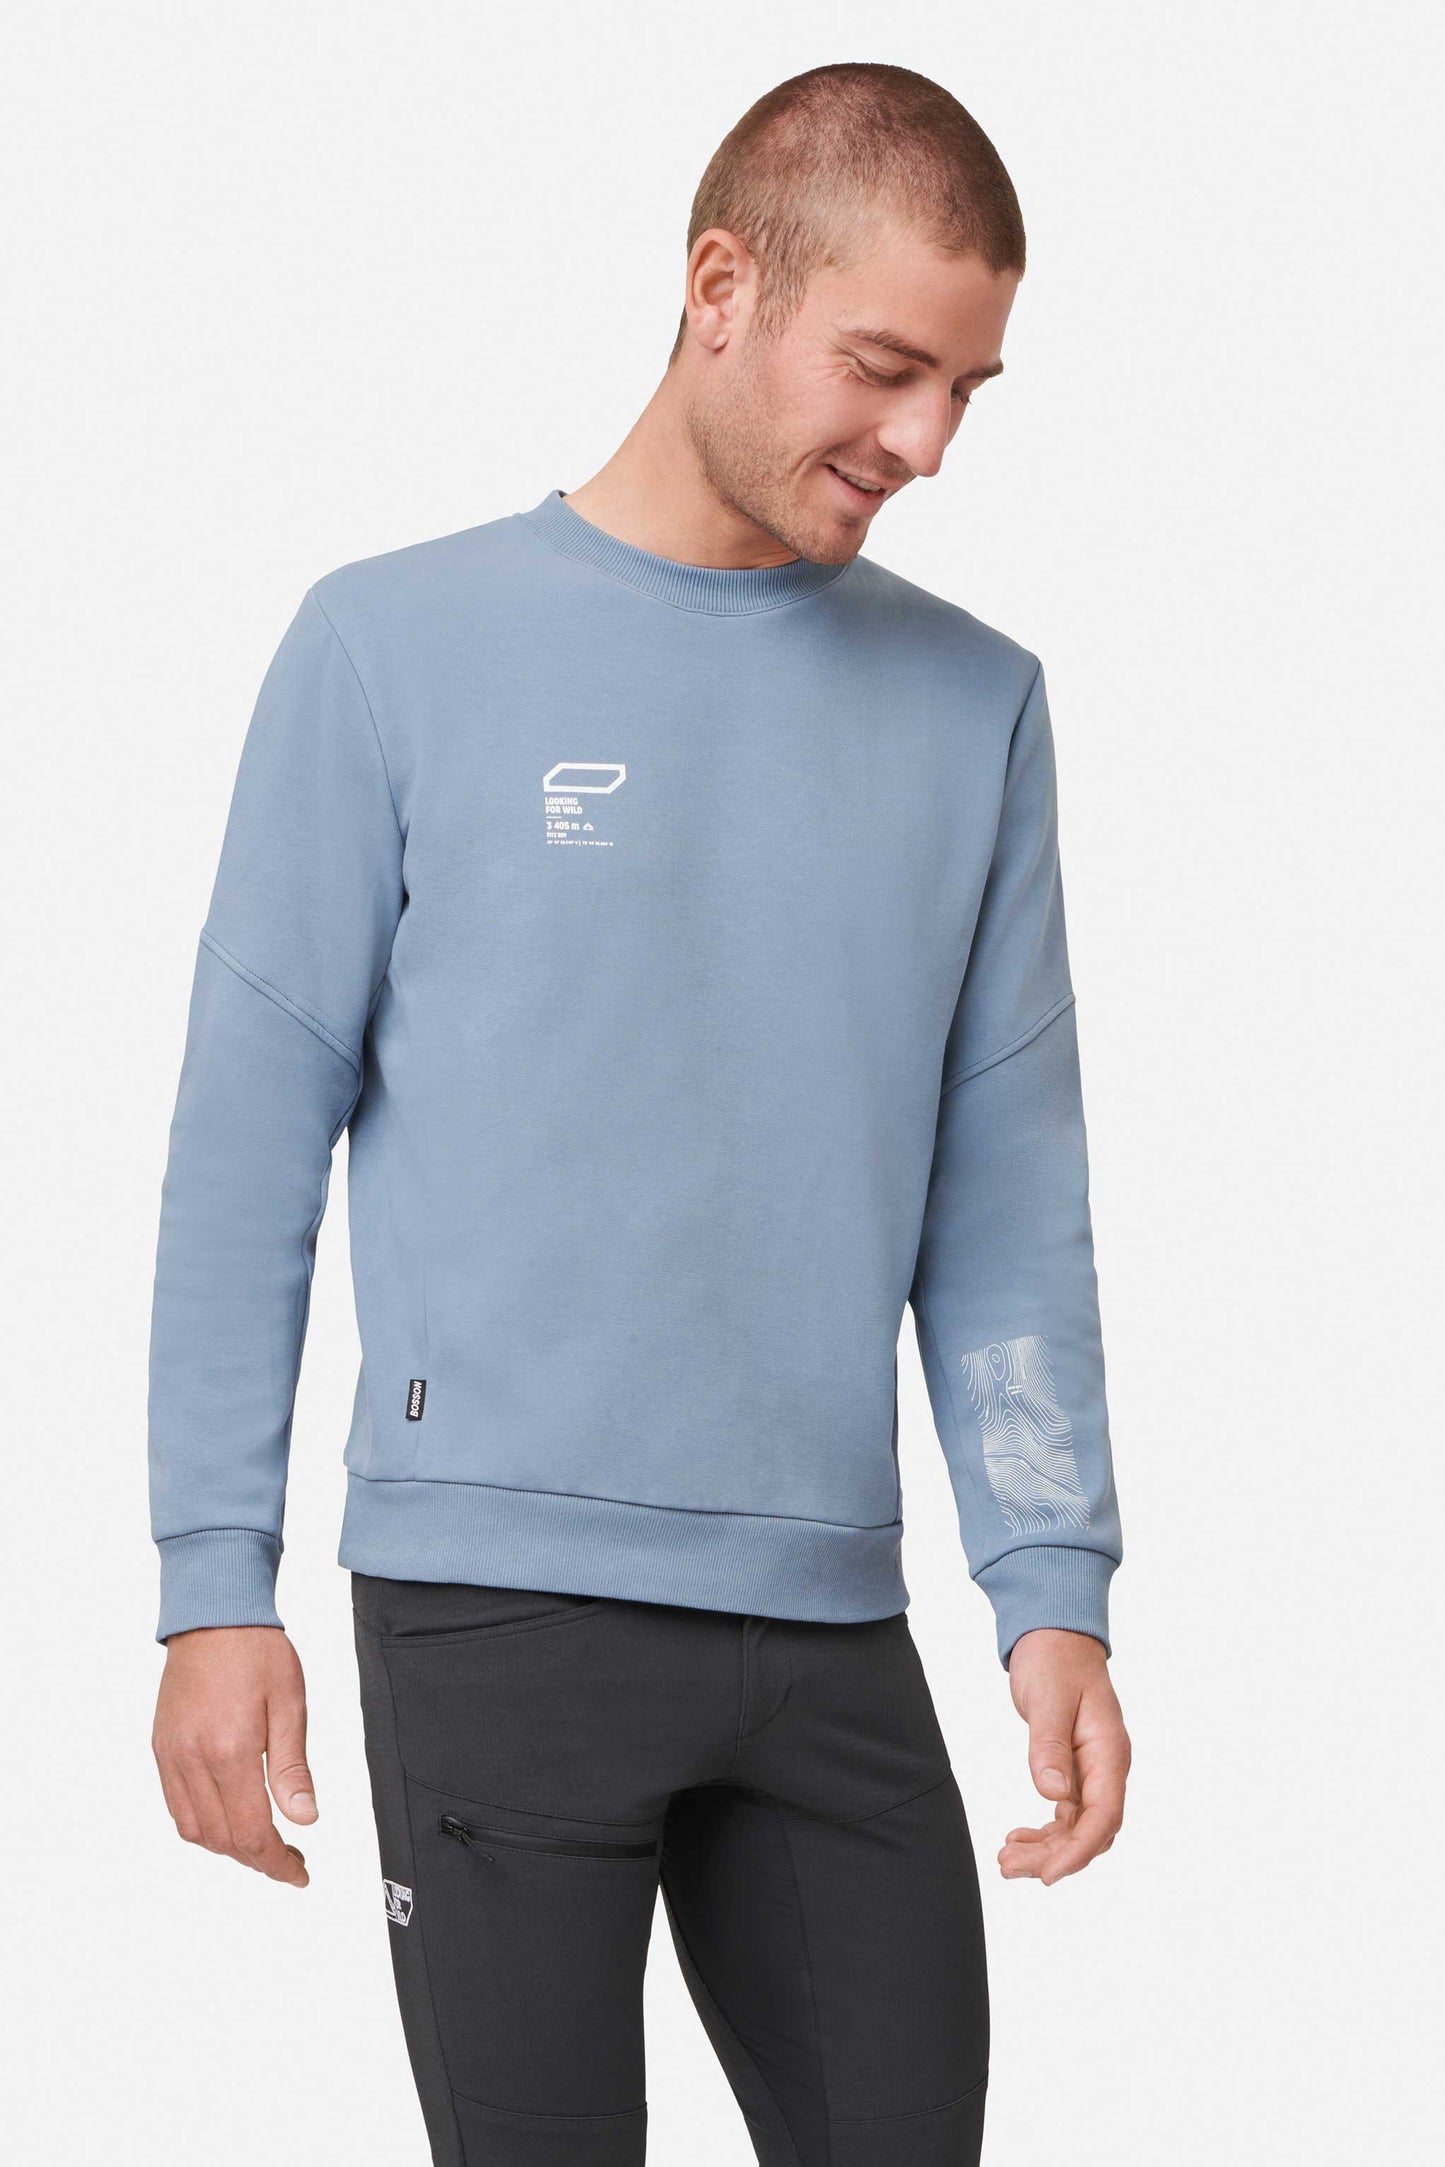 Bosson Organic cotton sweatshirt GREYISH BLUE